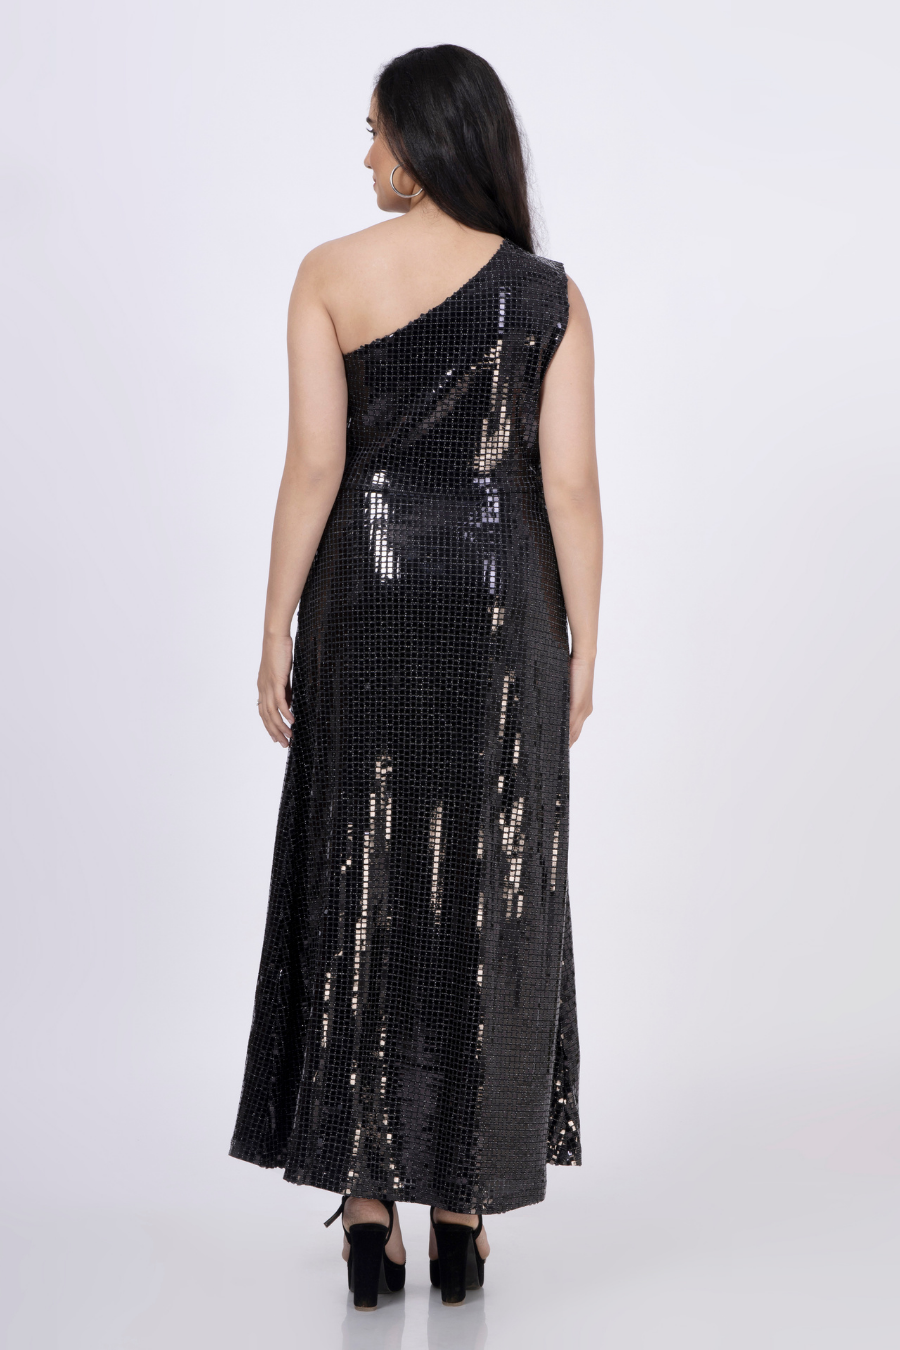 'Audrey' One Shoulder Dress Sewing Pattern